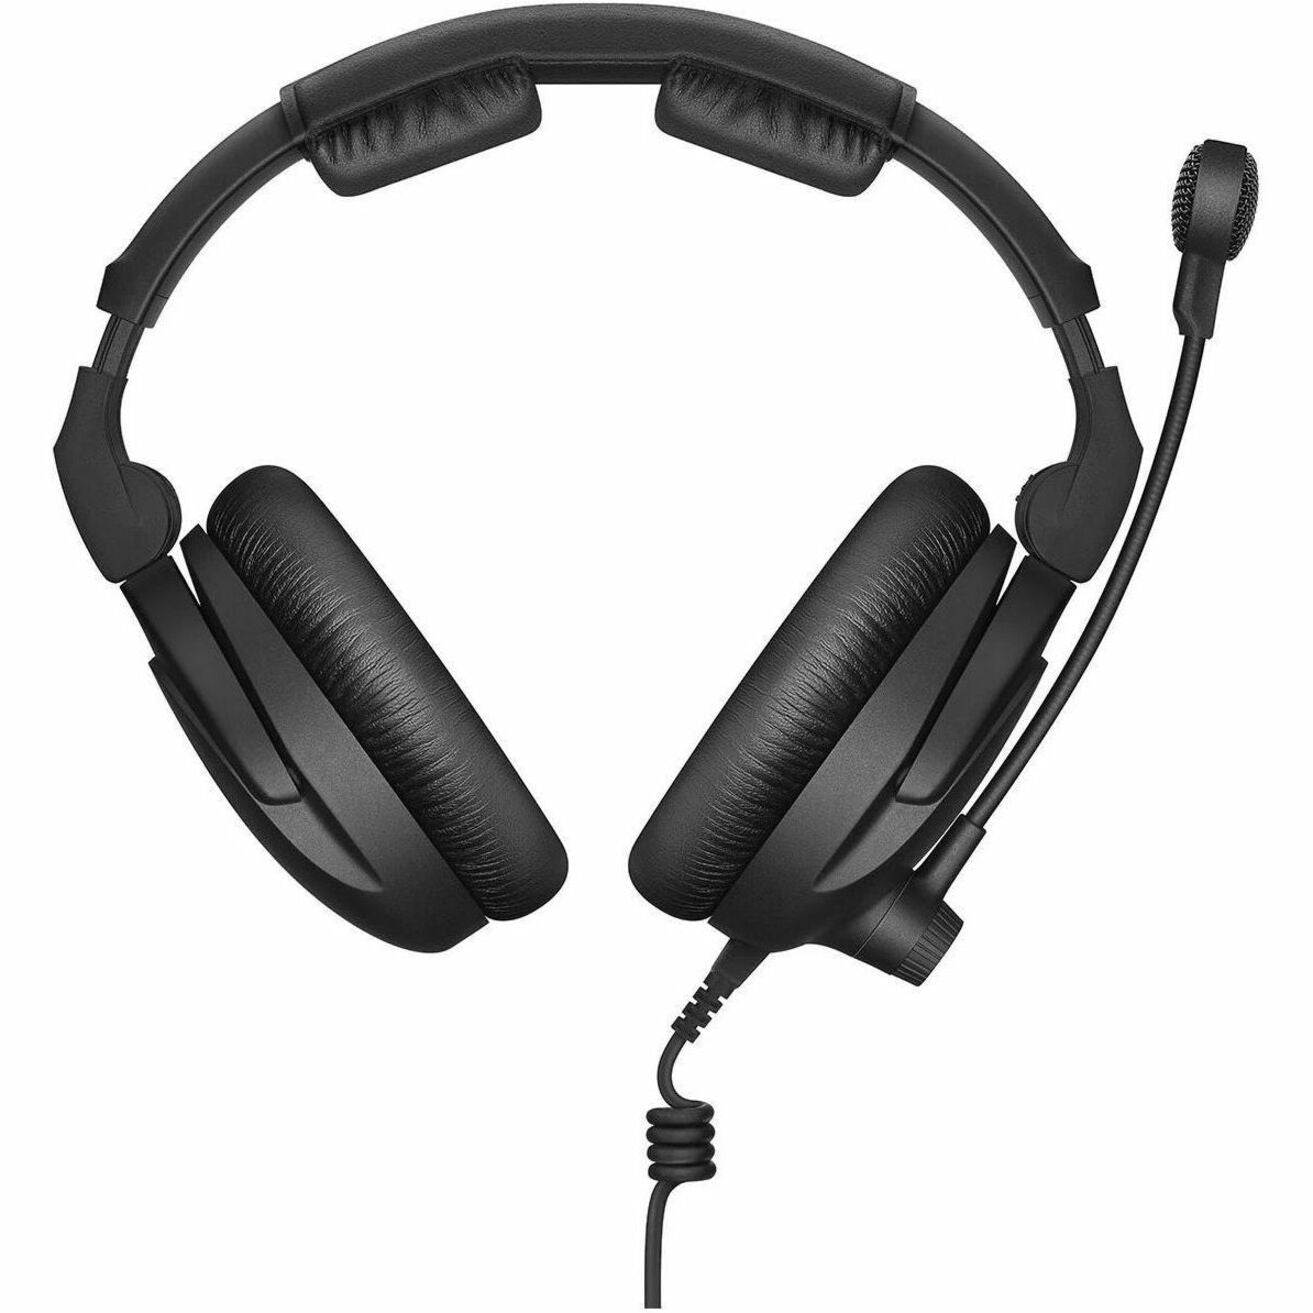 Sennheiser 506901 HMD 300-XQ-2 Headset, Binaural Over-the-head Stereo Headset for Broadcasting